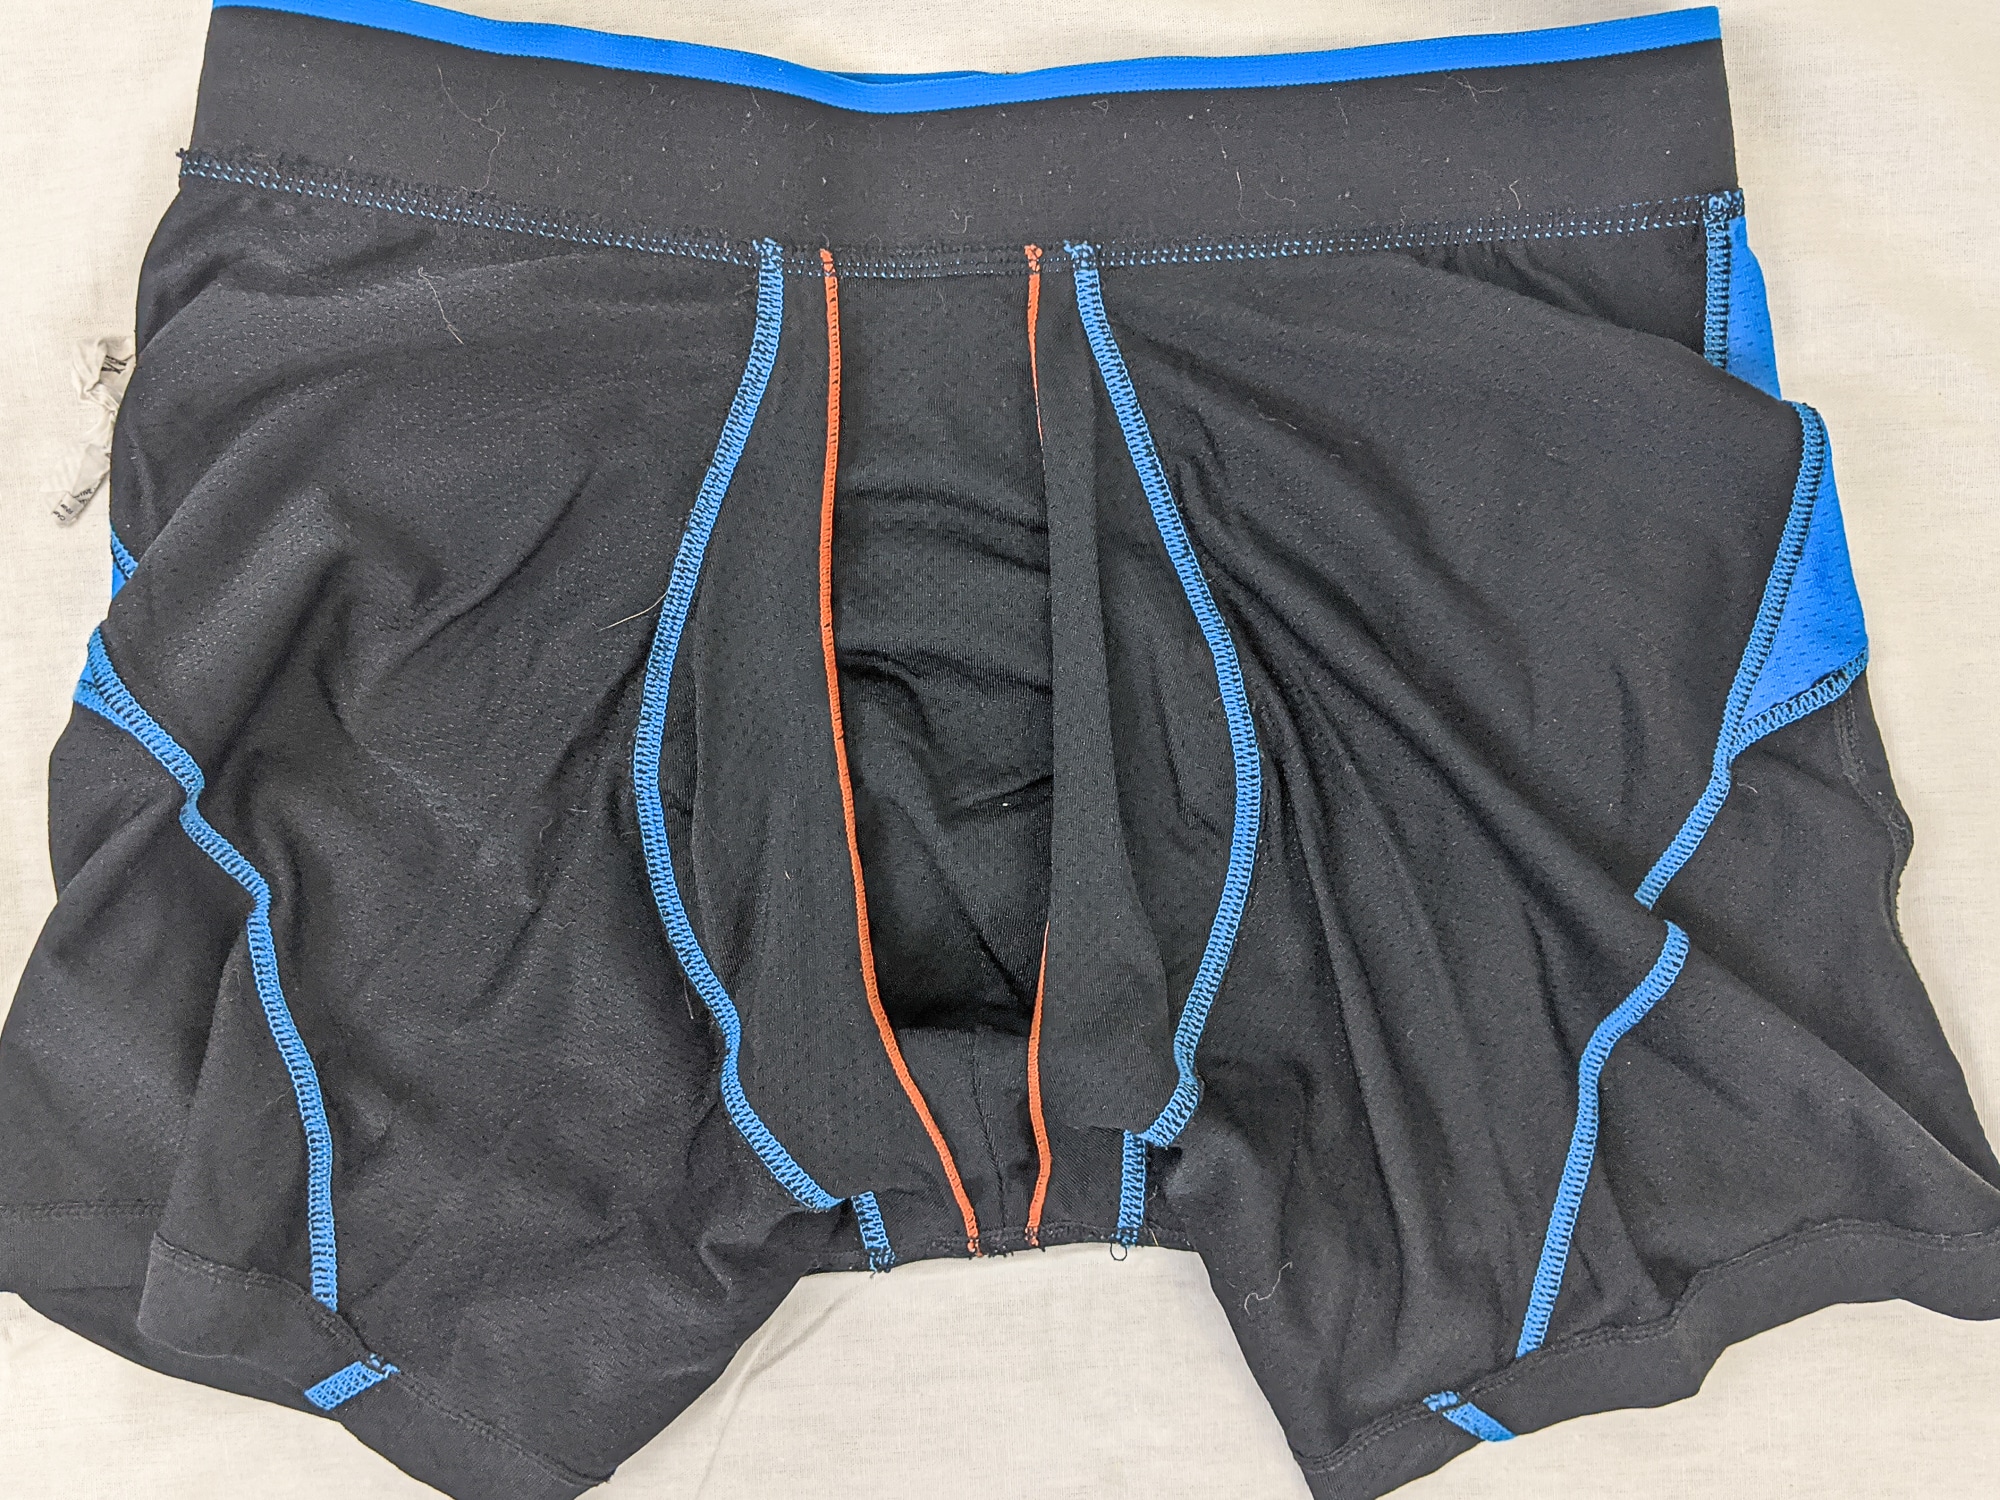 Saxx Kinetic Sport Shorts - Uplift Intimate Apparel